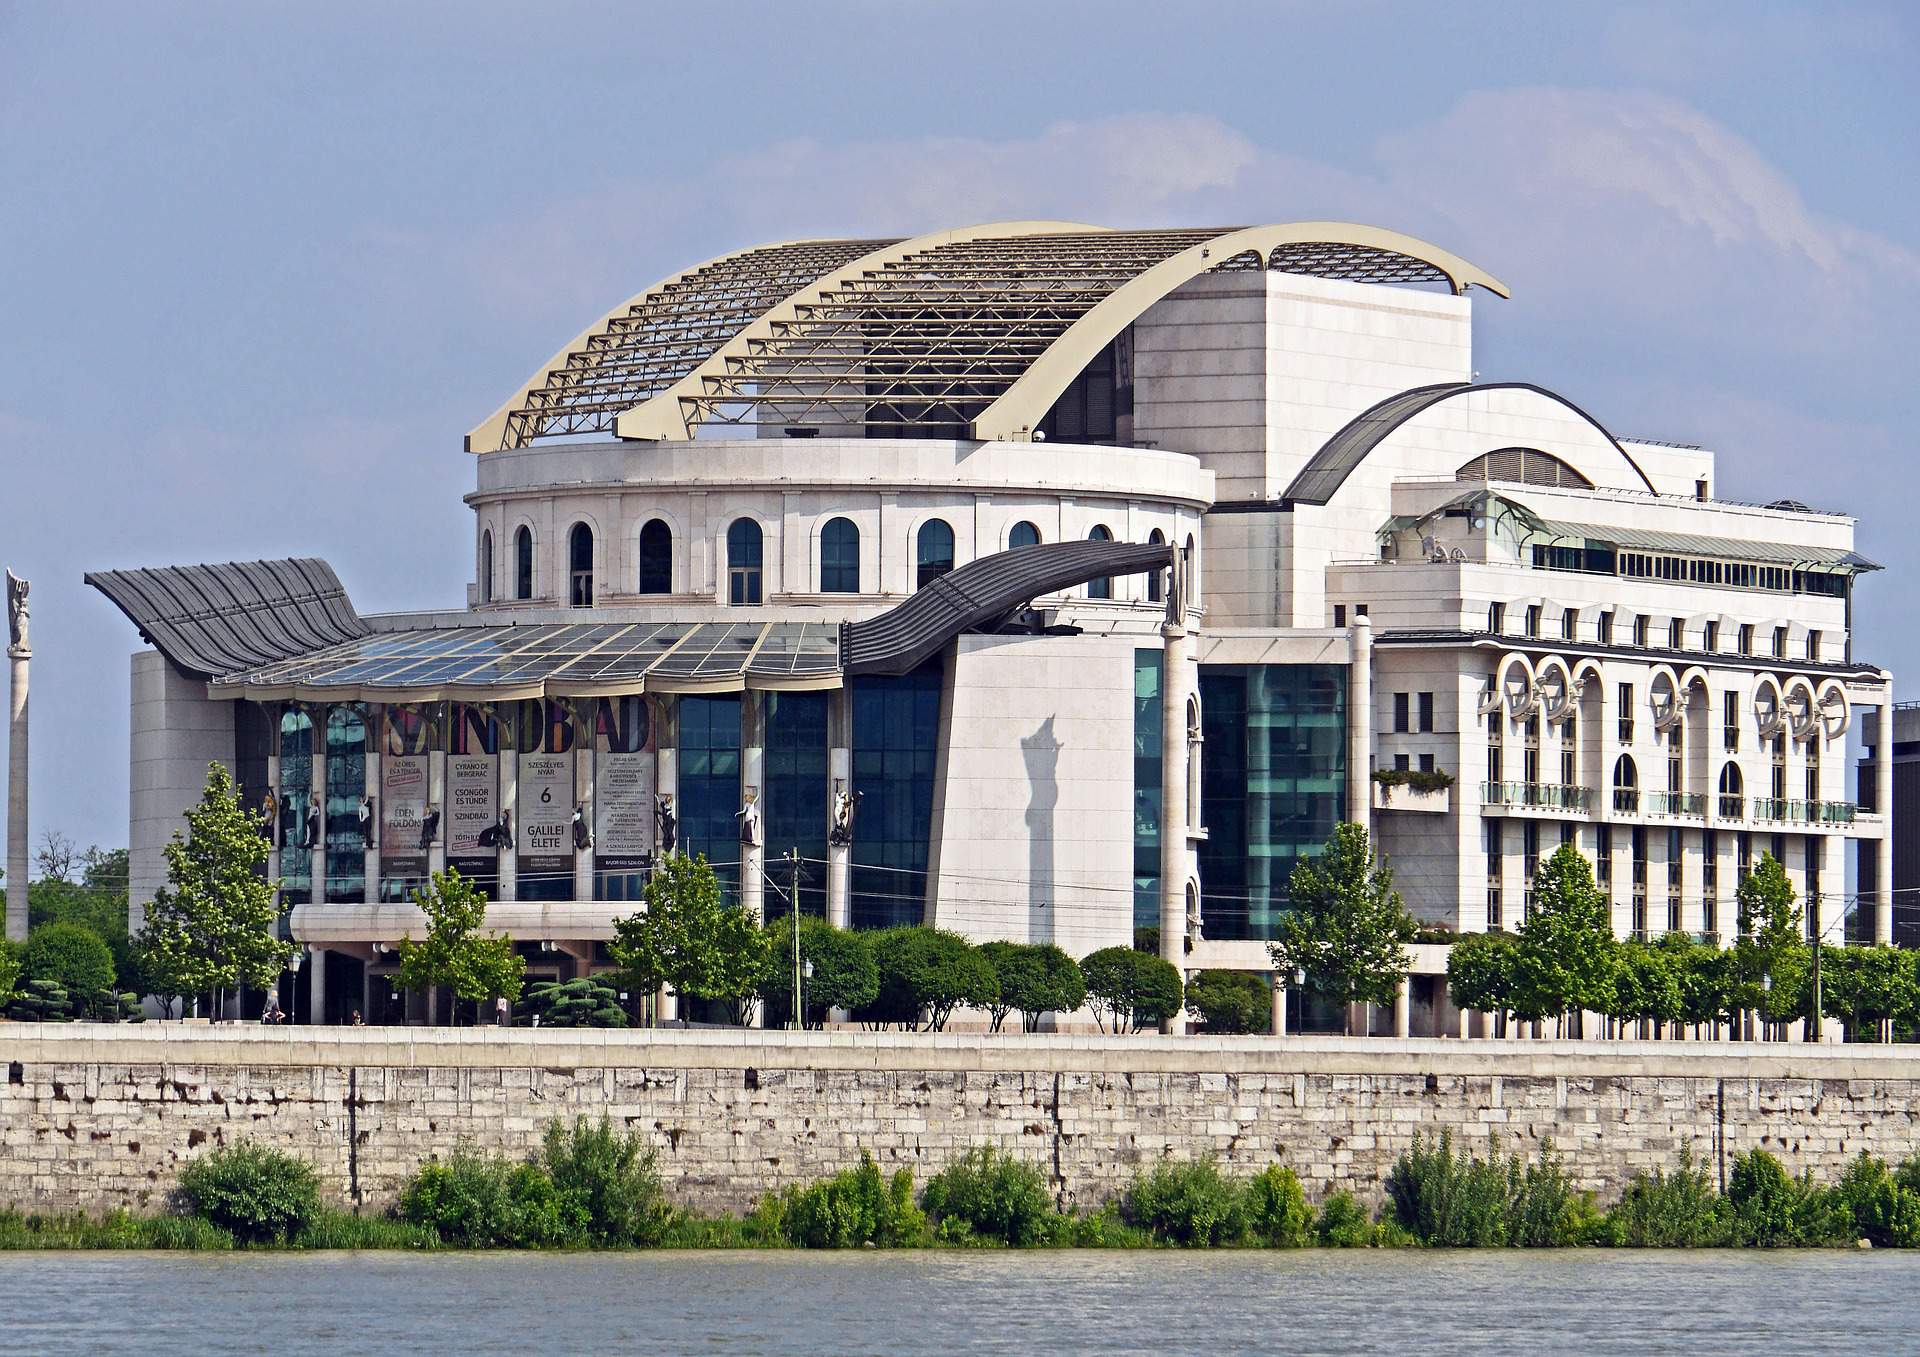 Nationaltheater Budapest